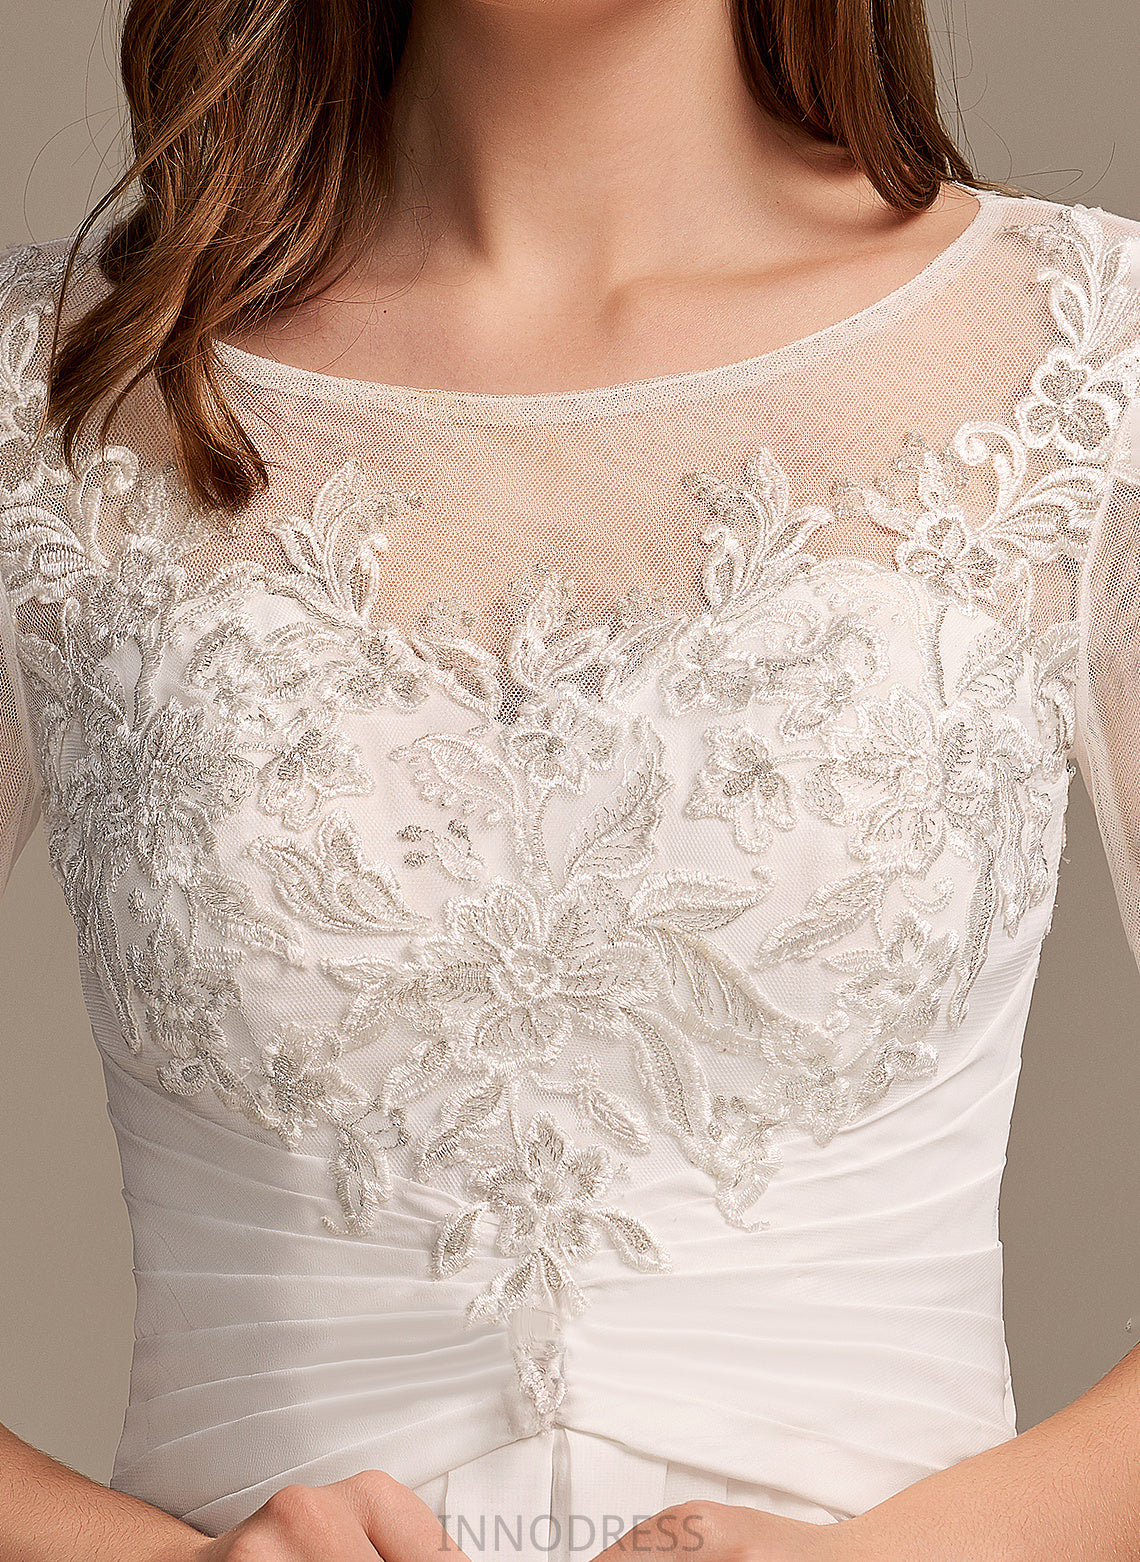 Asymmetrical Wedding Dresses Wedding With Chiffon Micaela Lace Illusion Dress A-Line